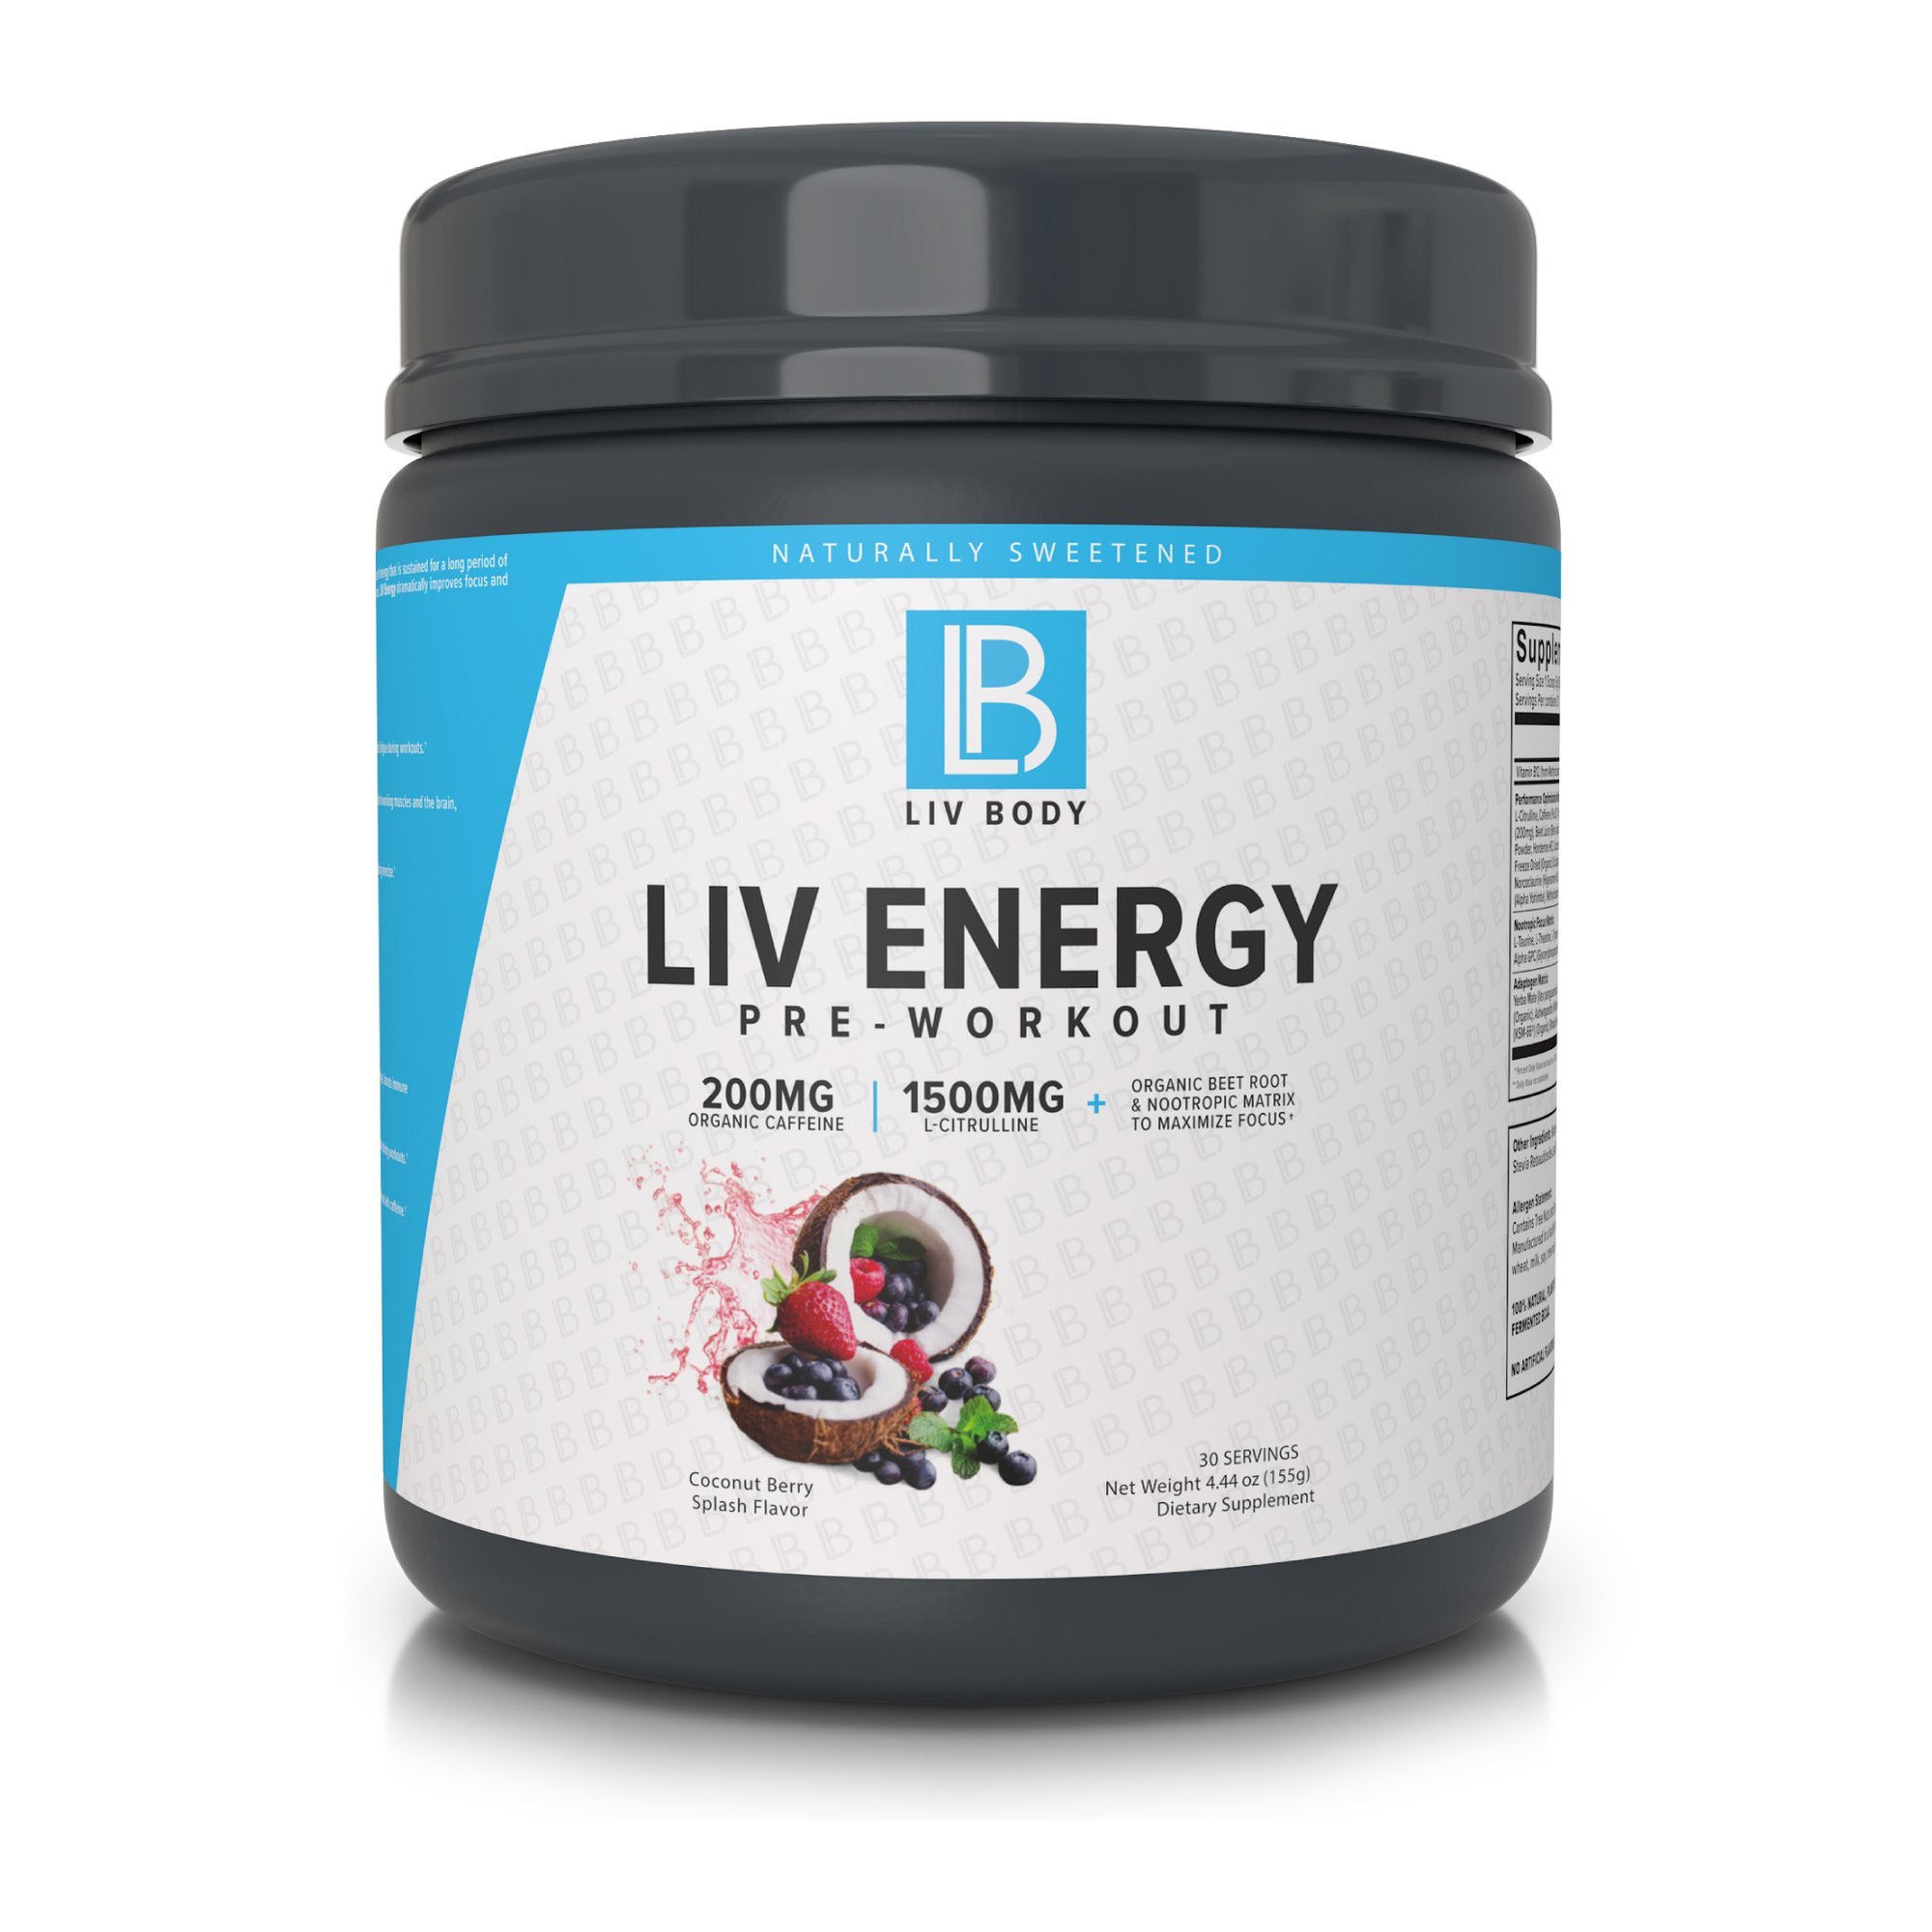 LIV Energy